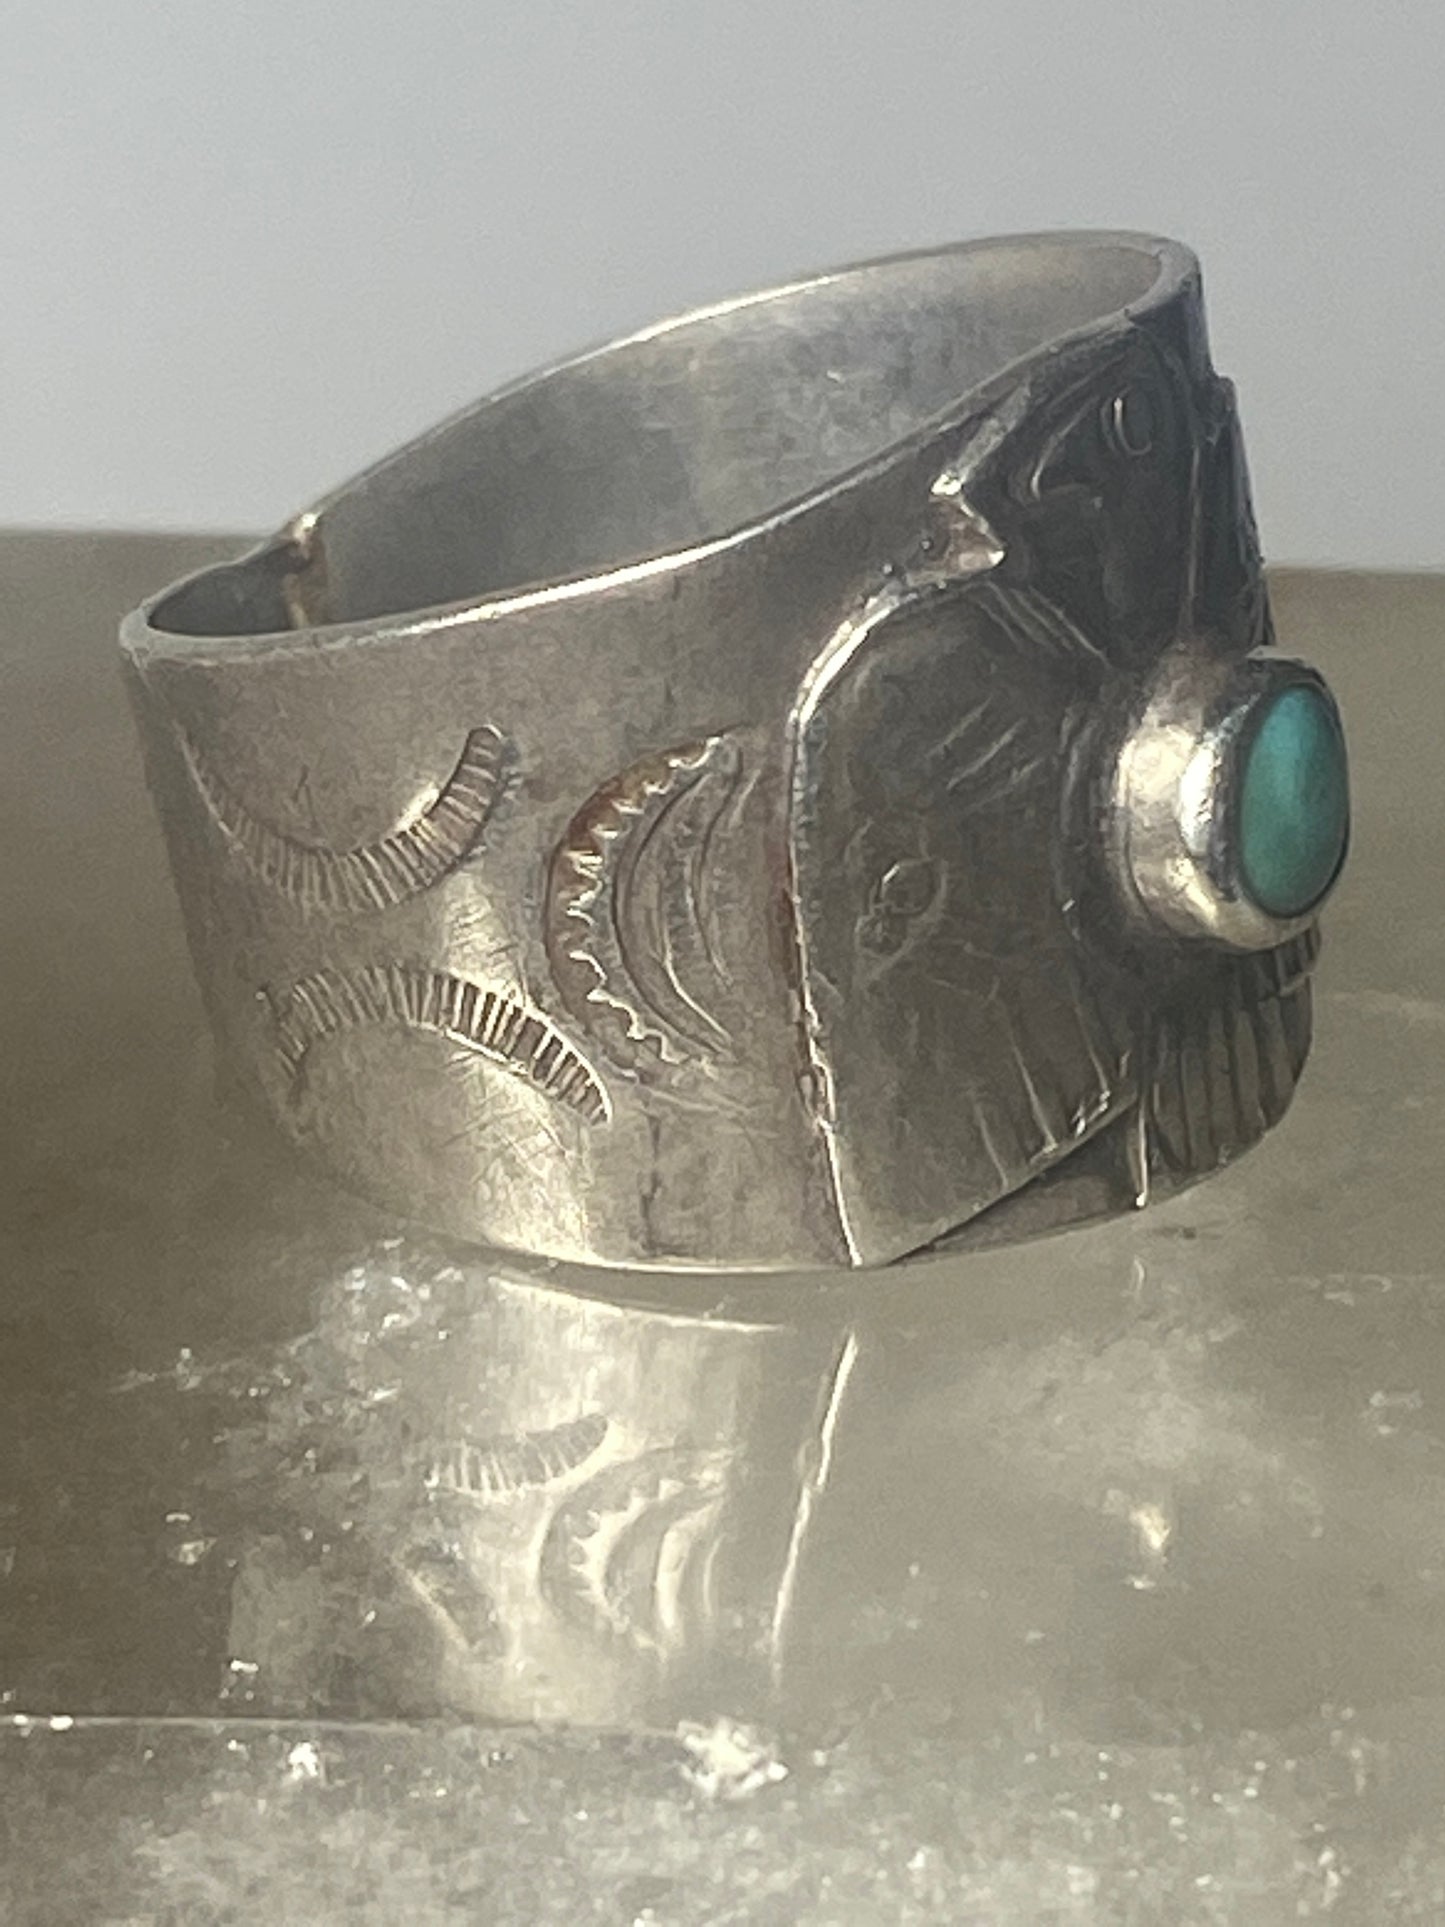 Phoenix ring size 5.25 southwest turquoise sterling silver women girls